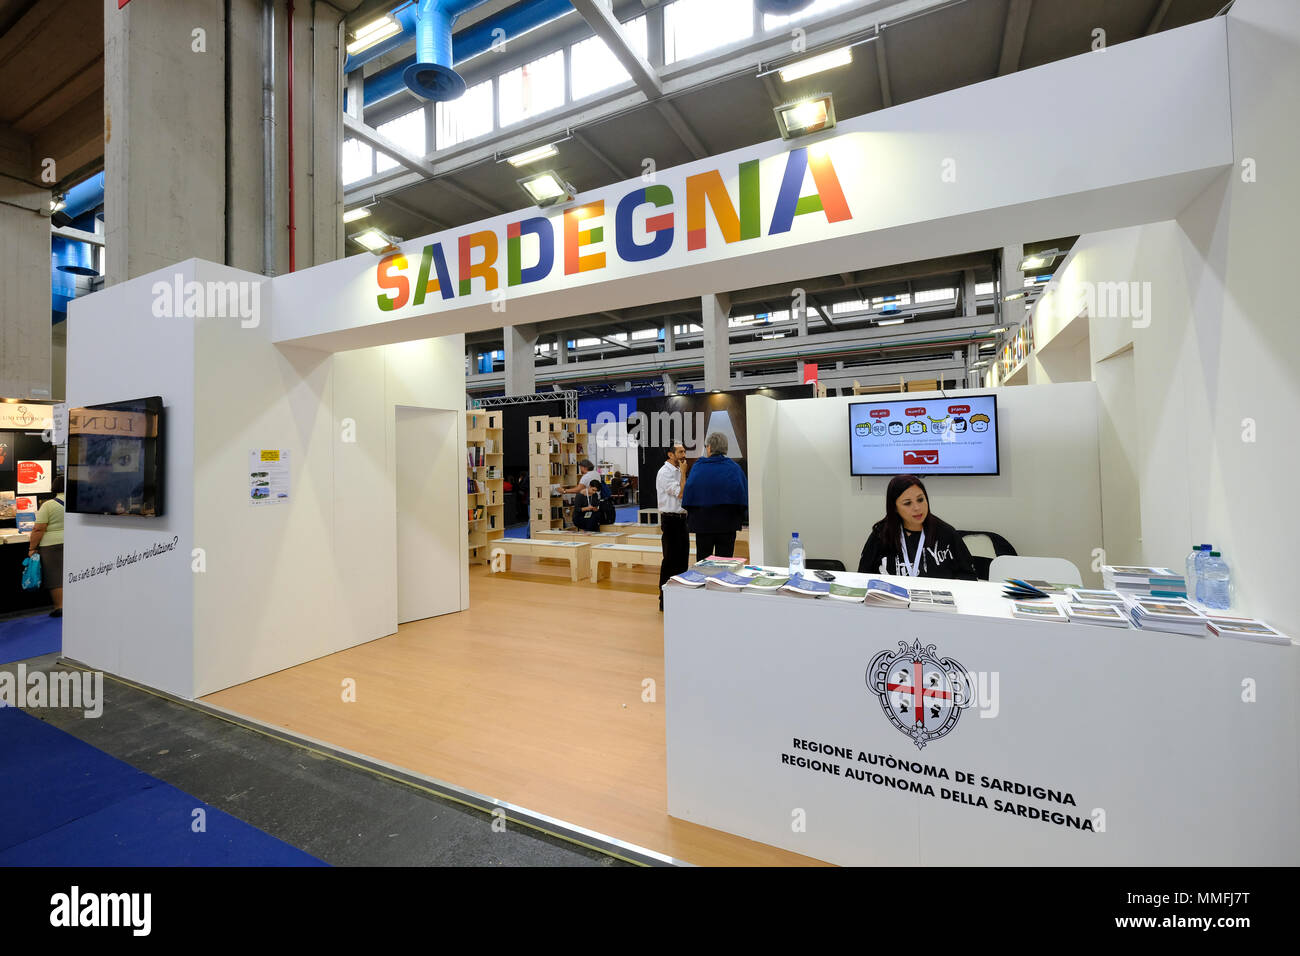 Turín, Piamonte, Italia, 10 de mayo, 2018. Feria Internacional del Libro 2018,primer día.Sardegna crédito stand: RENATO VALTERZA/Alamy Live News Foto de stock